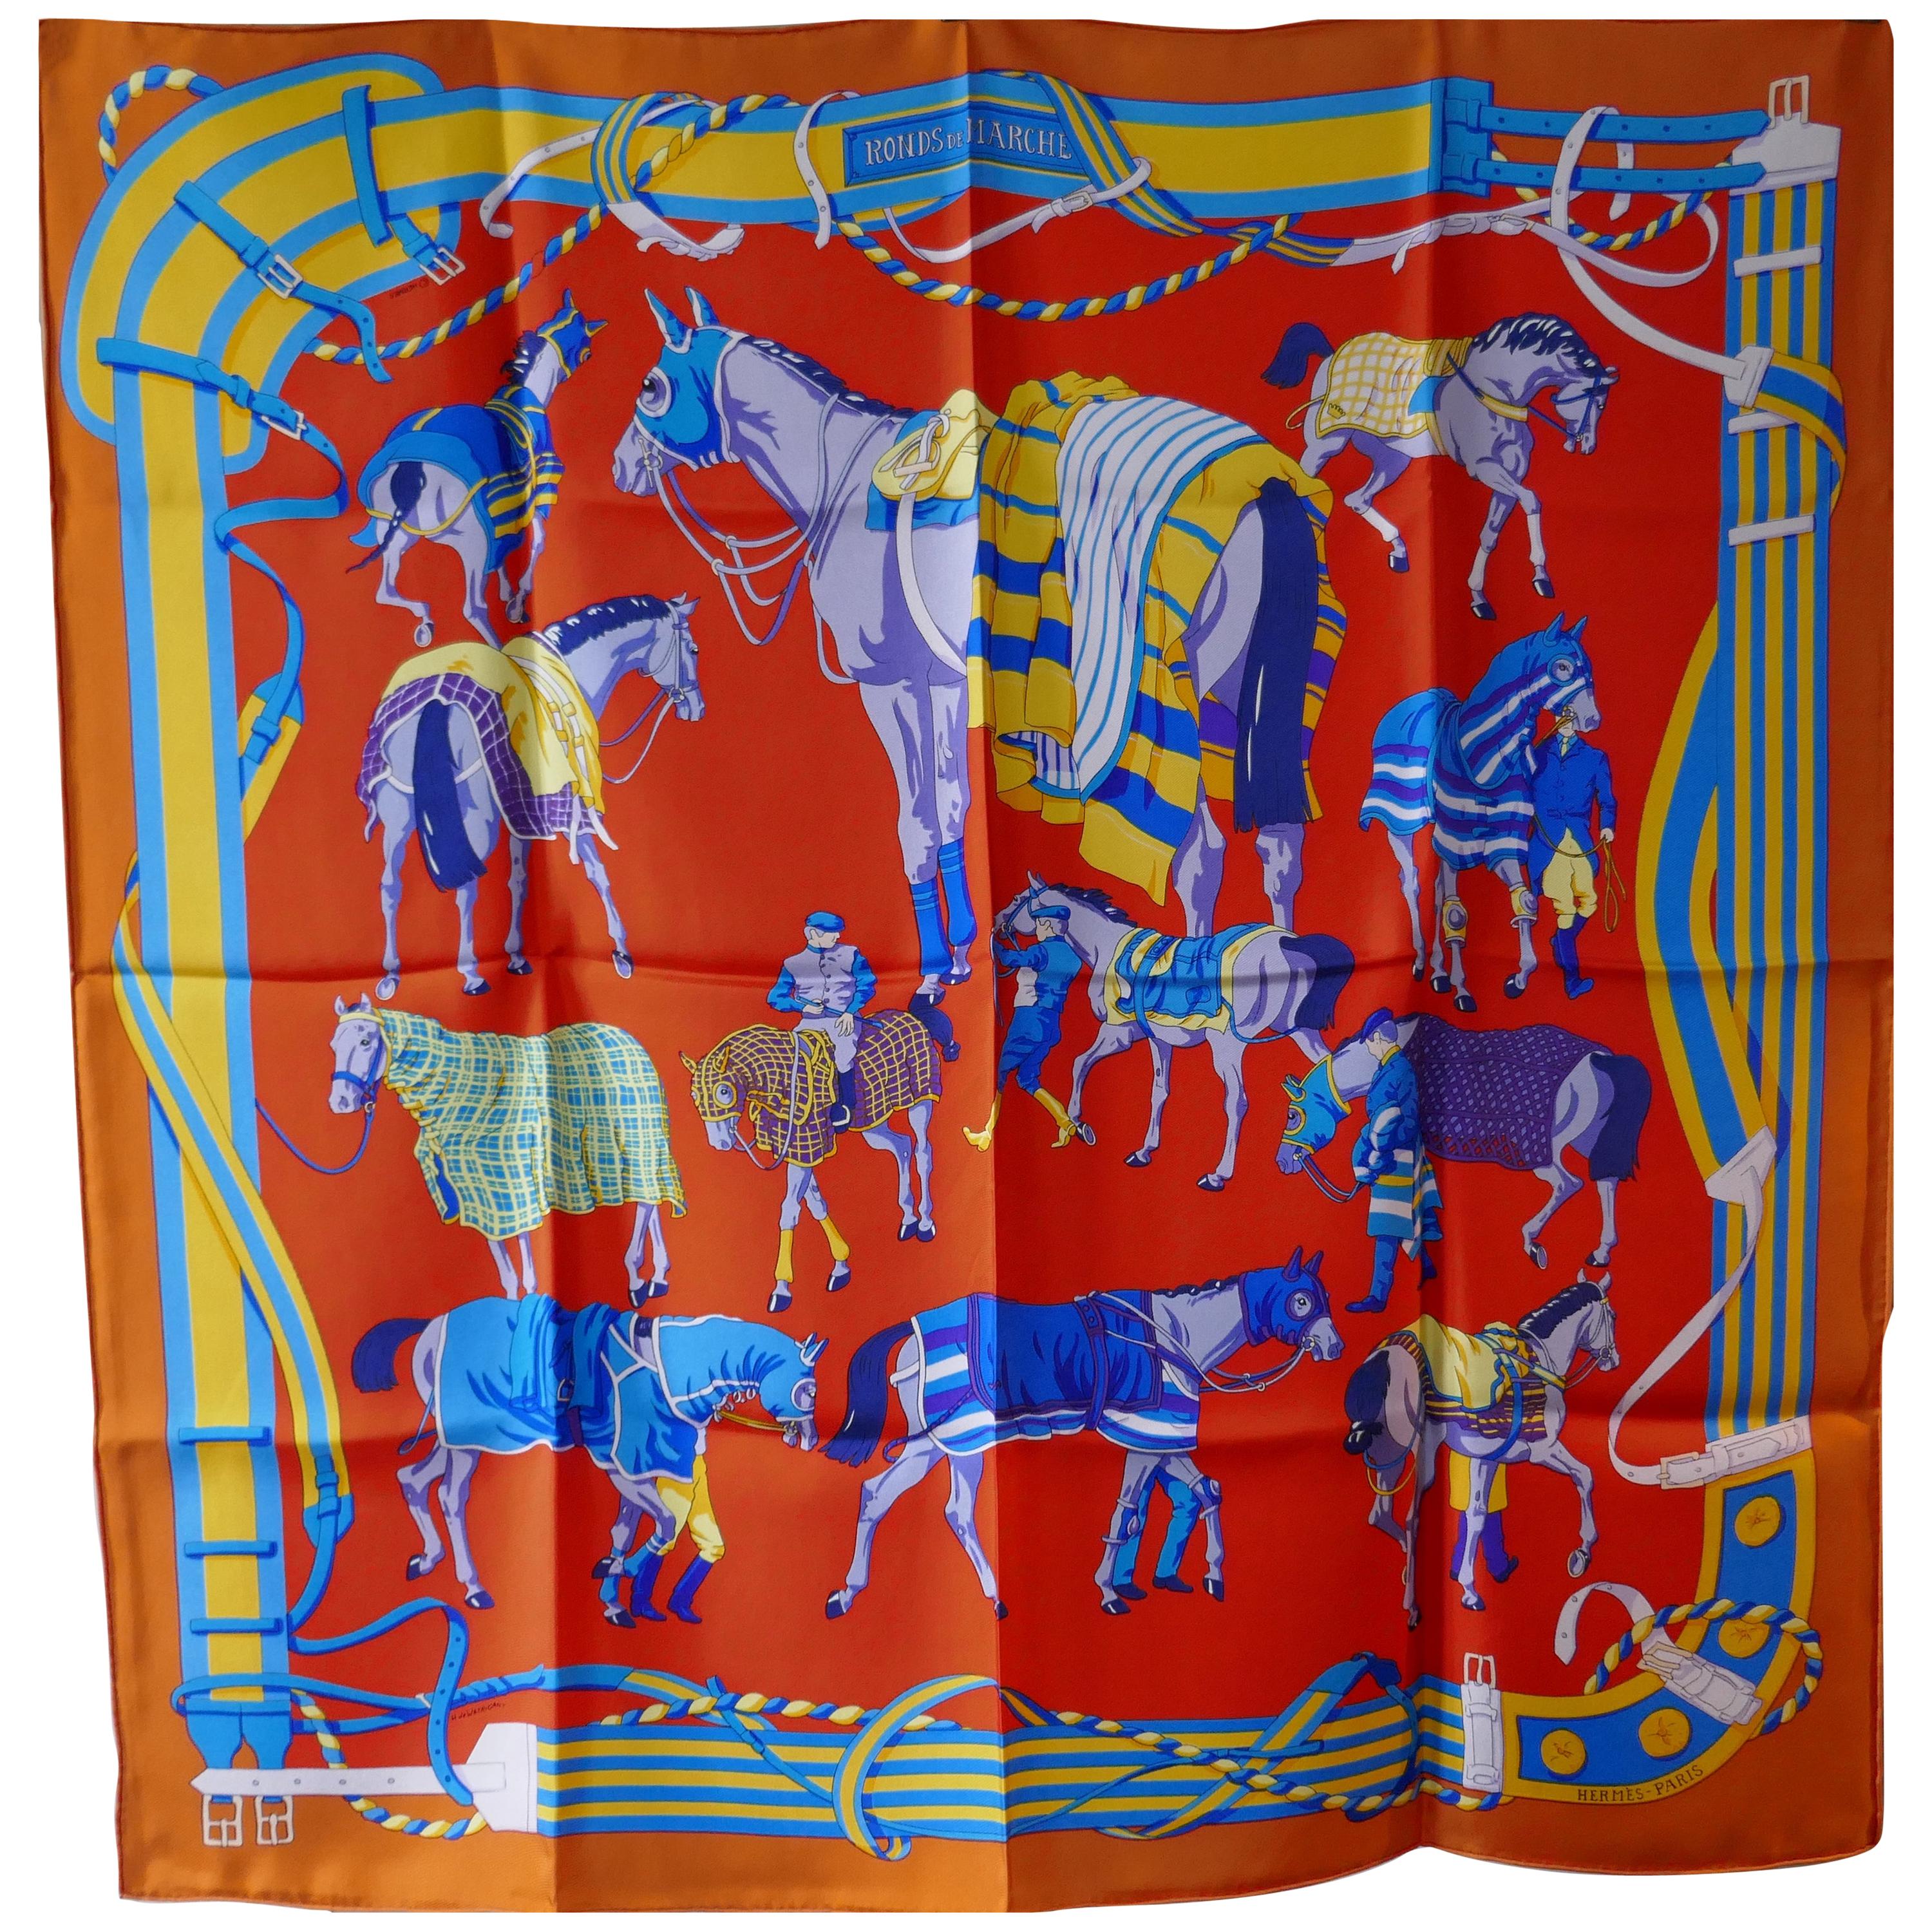 Rare New Hermes 100% Silk Scarf “Ronds de Marche” by Hubert de Watrigant For Sale